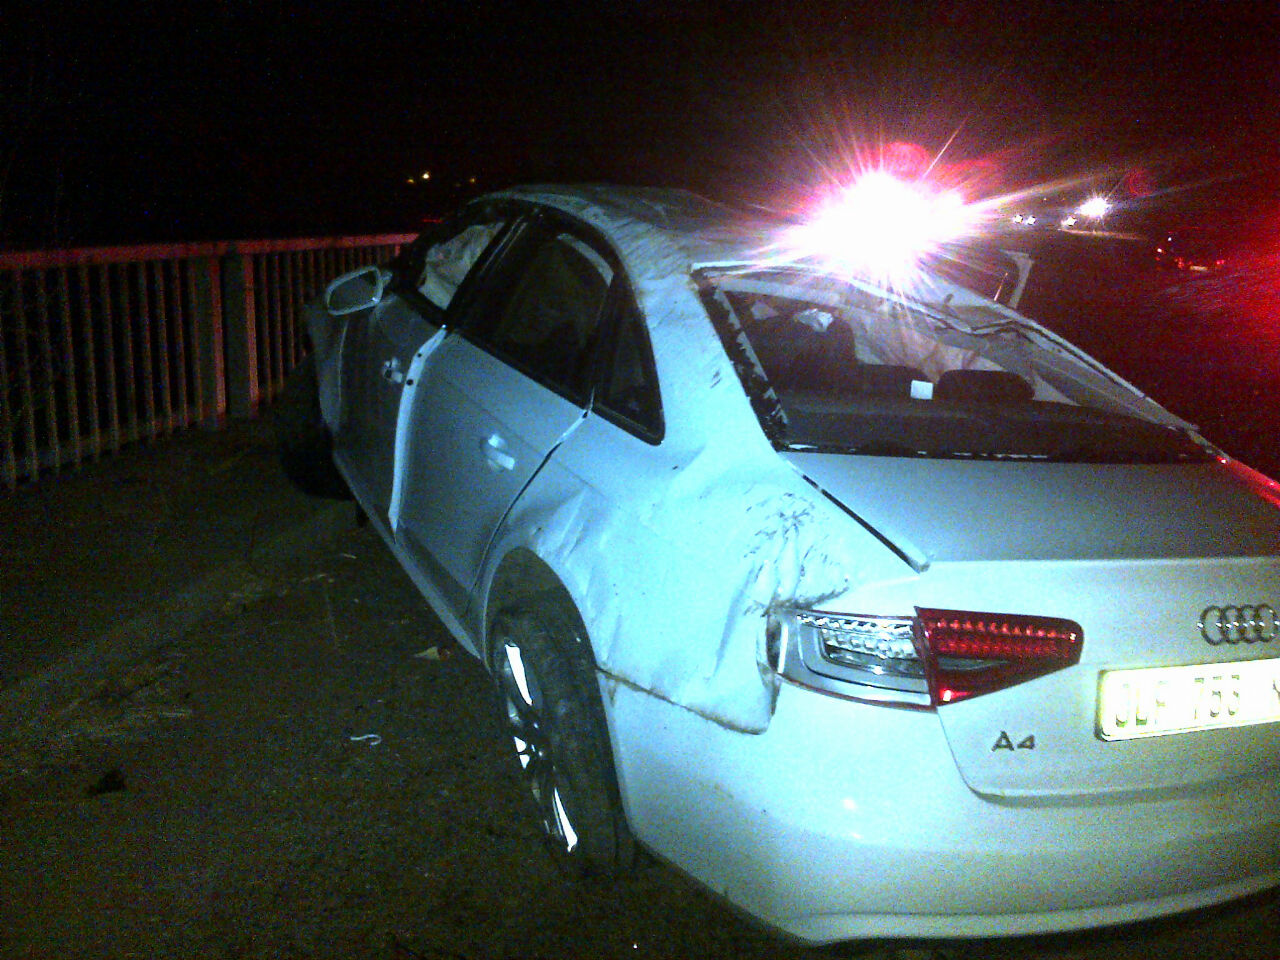 Vehicle crashes into bridge barrier on the N12 in Modderdam , Potchefstroom